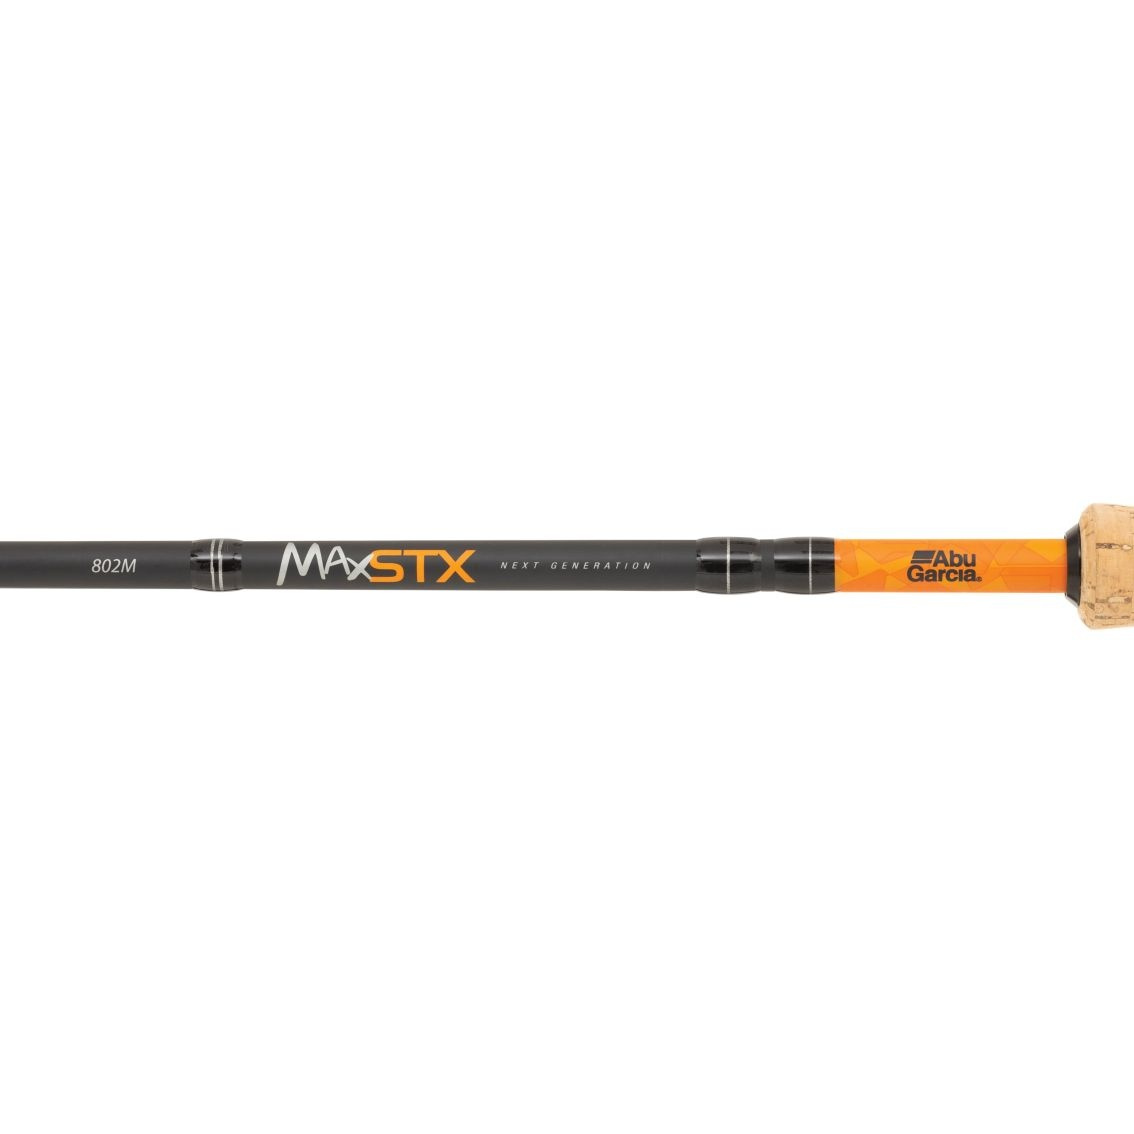 Abu Garcia Max STX Combo